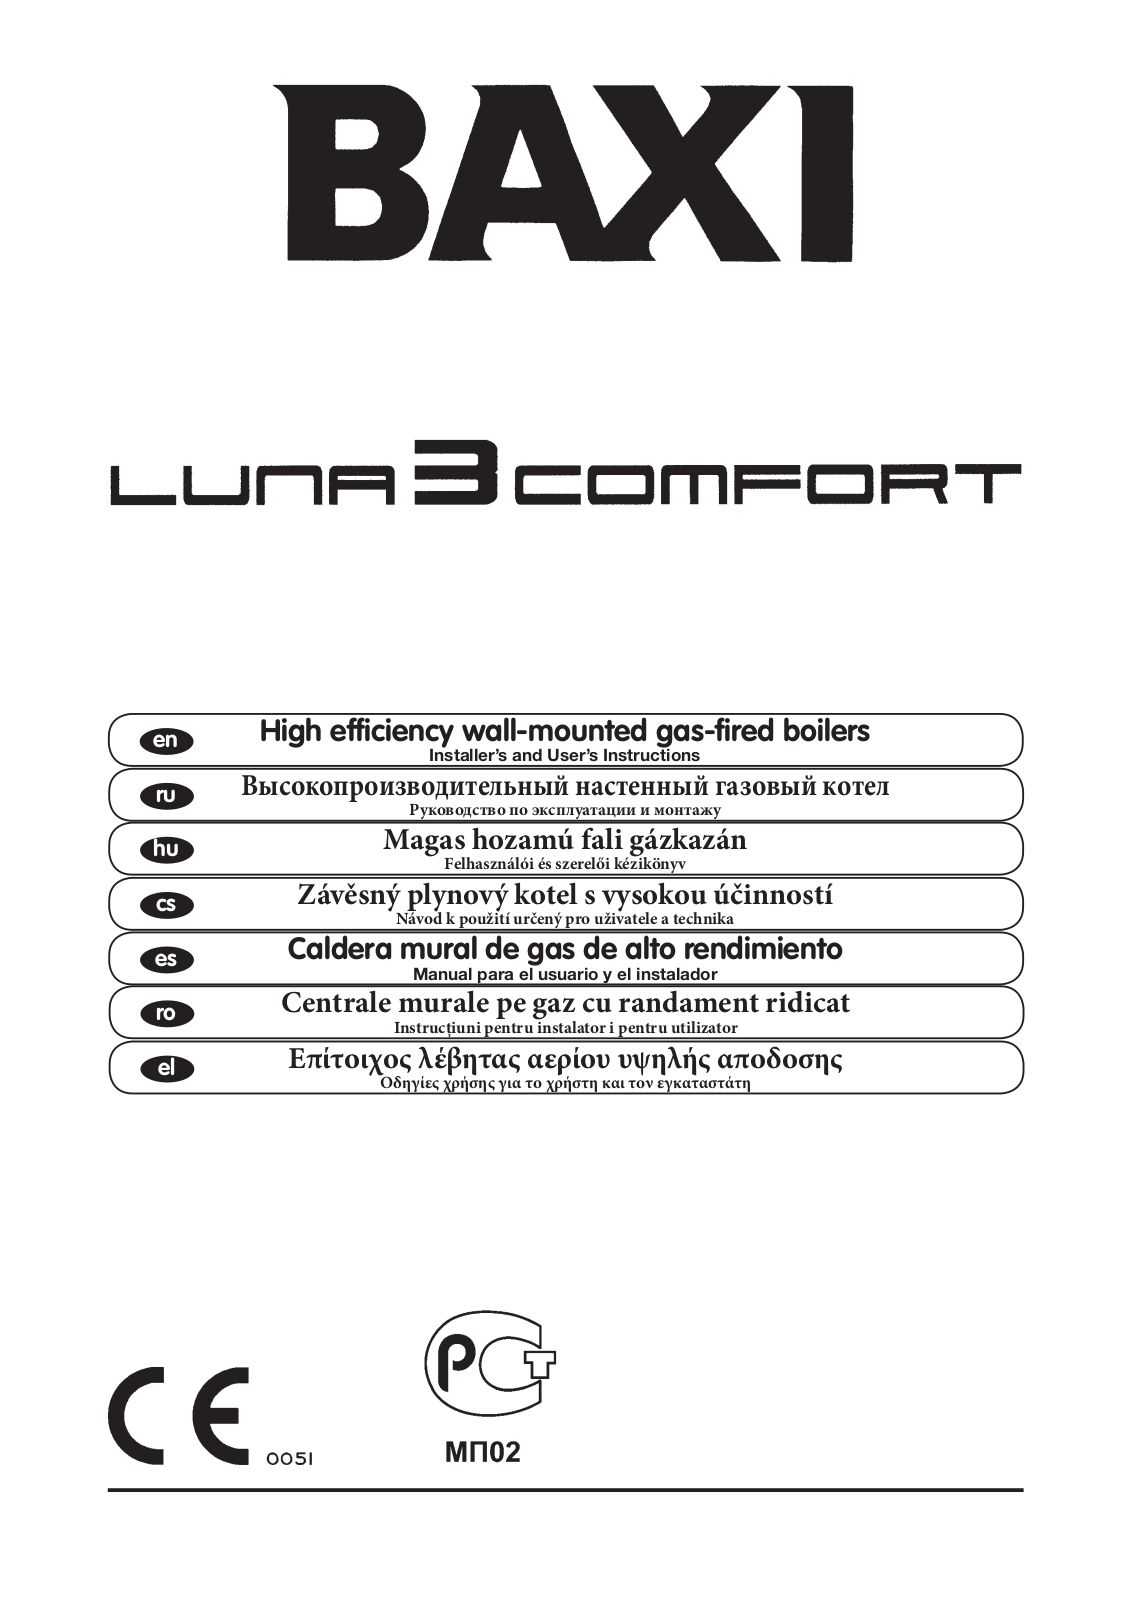 BAXI LUNA-3 Comfort COMBI User Manual